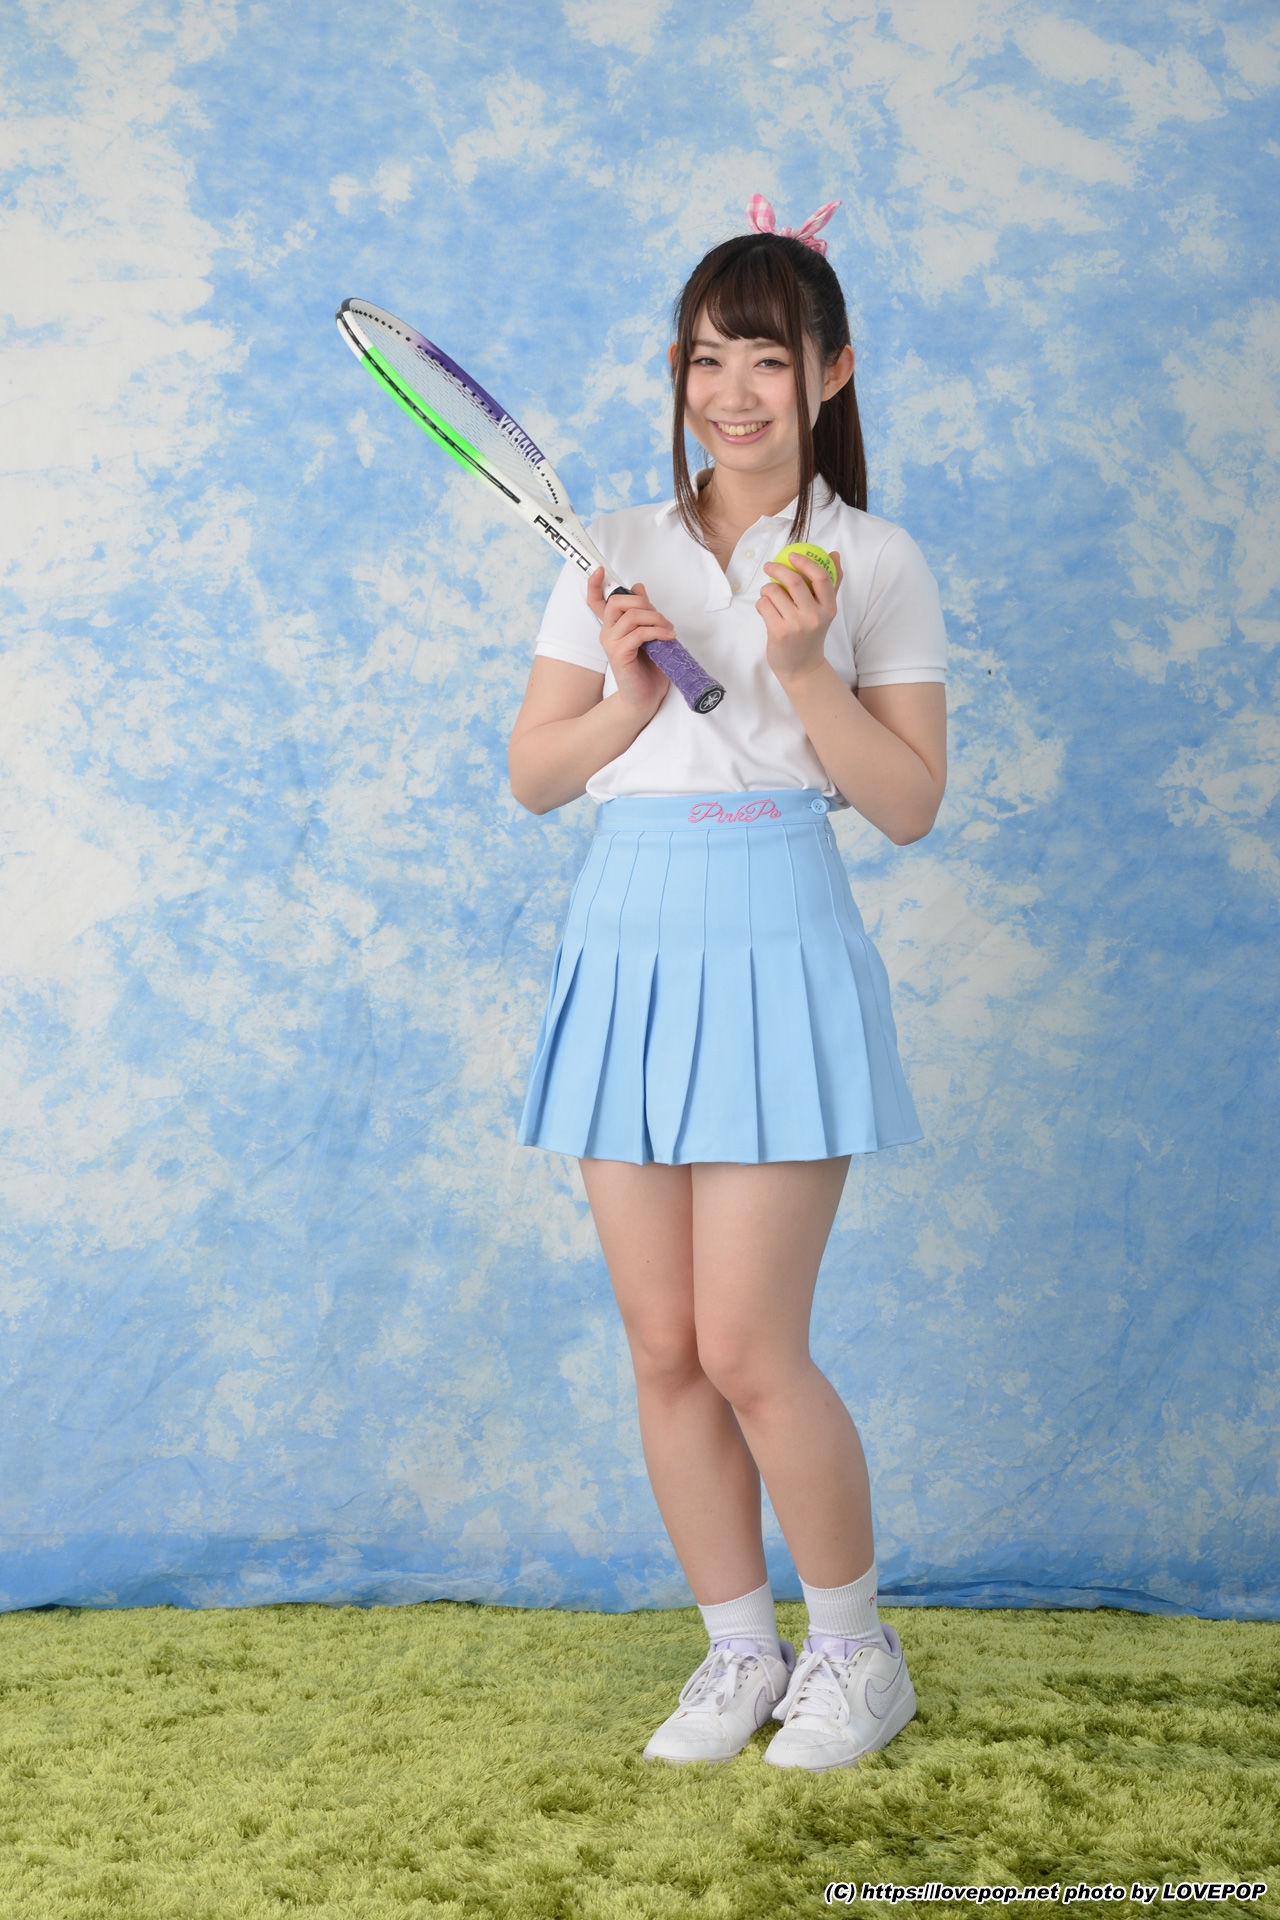 [LOVEPOP] Ayuna Niko あゆな虹恋 tennis ball and racket ! - PPV 